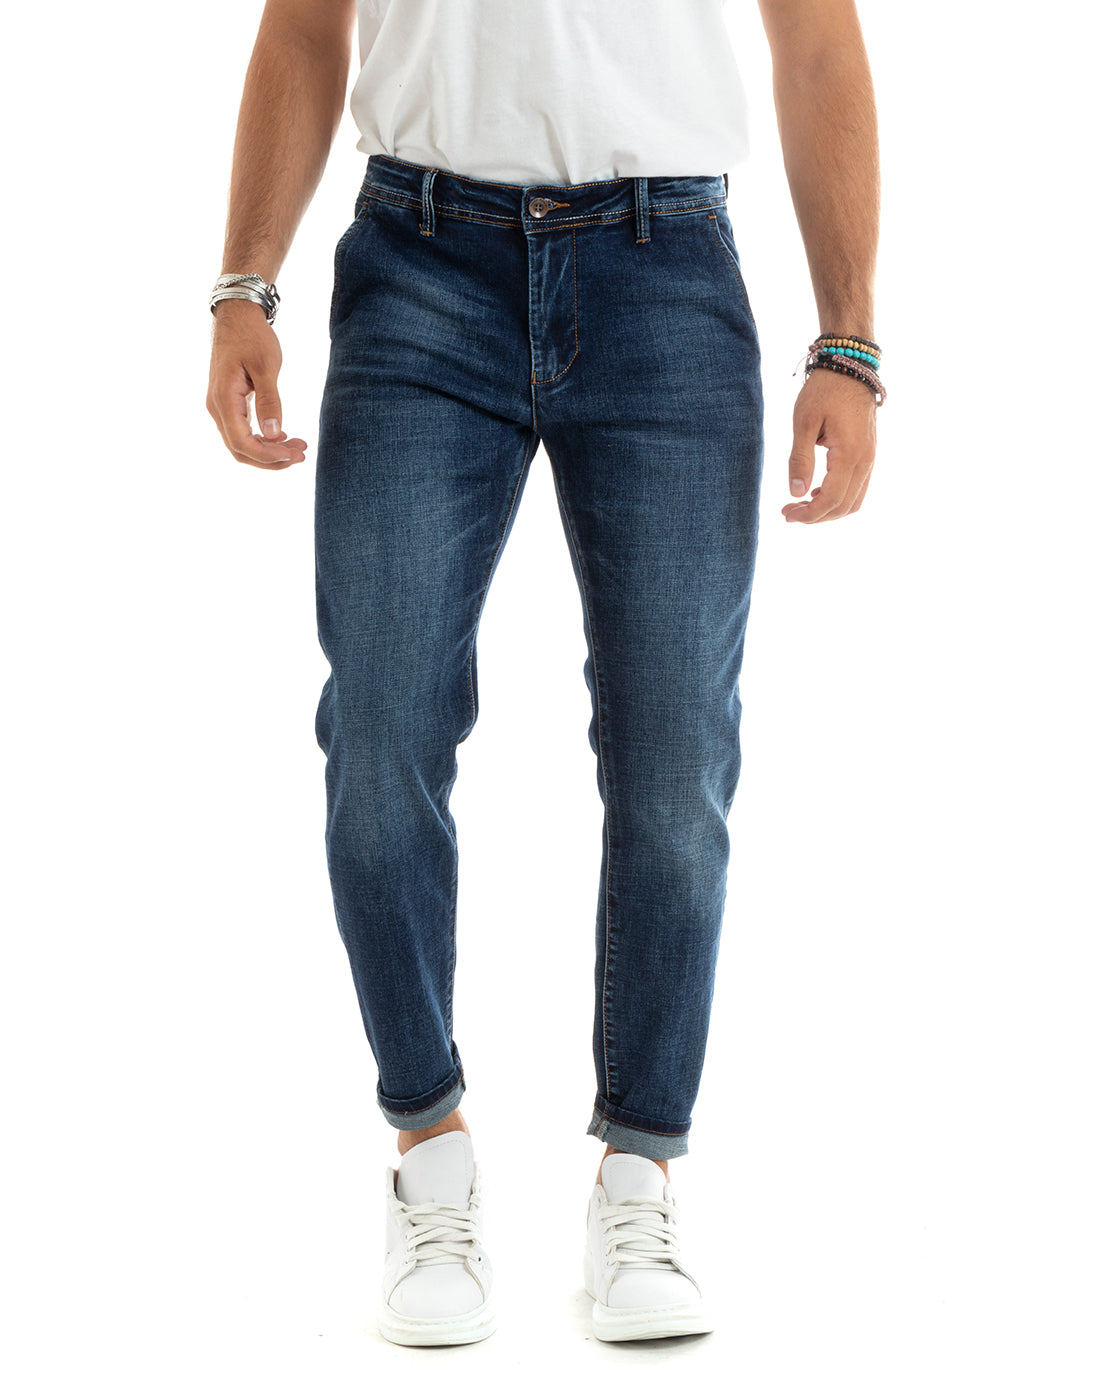 Pantaloni Uomo Jeans Tasca America Slim Fit Blu Denim Stone Washed GIOSAL-P5967A